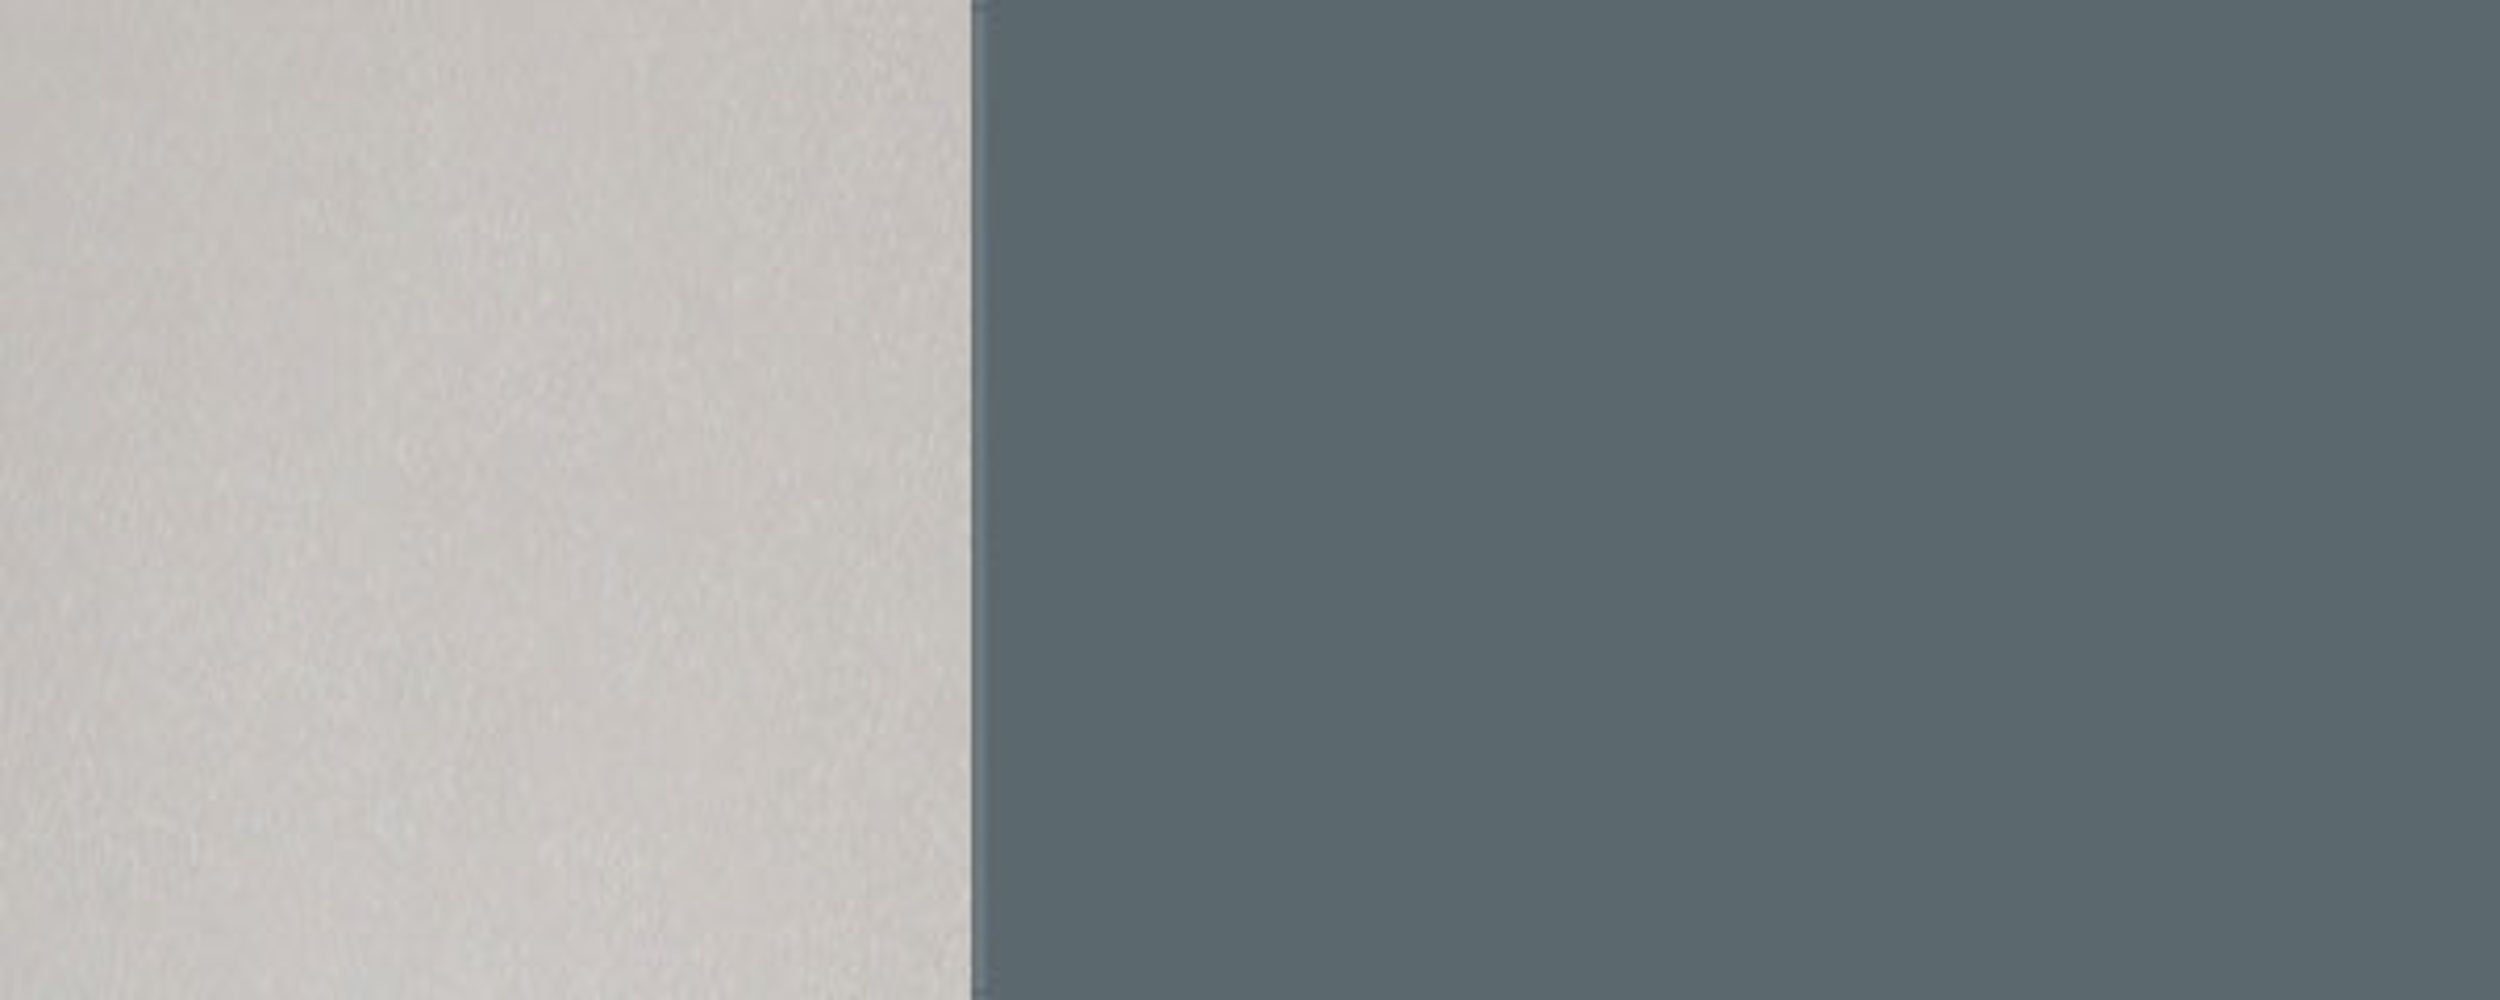 (Florence) Gasdruckdämpfer Florence Front- & Feldmann-Wohnen Klapptür 7031 Korpusfarbe grifflos Klapphängeschrank Hochglanz 80cm wählbar blaugrau RAL